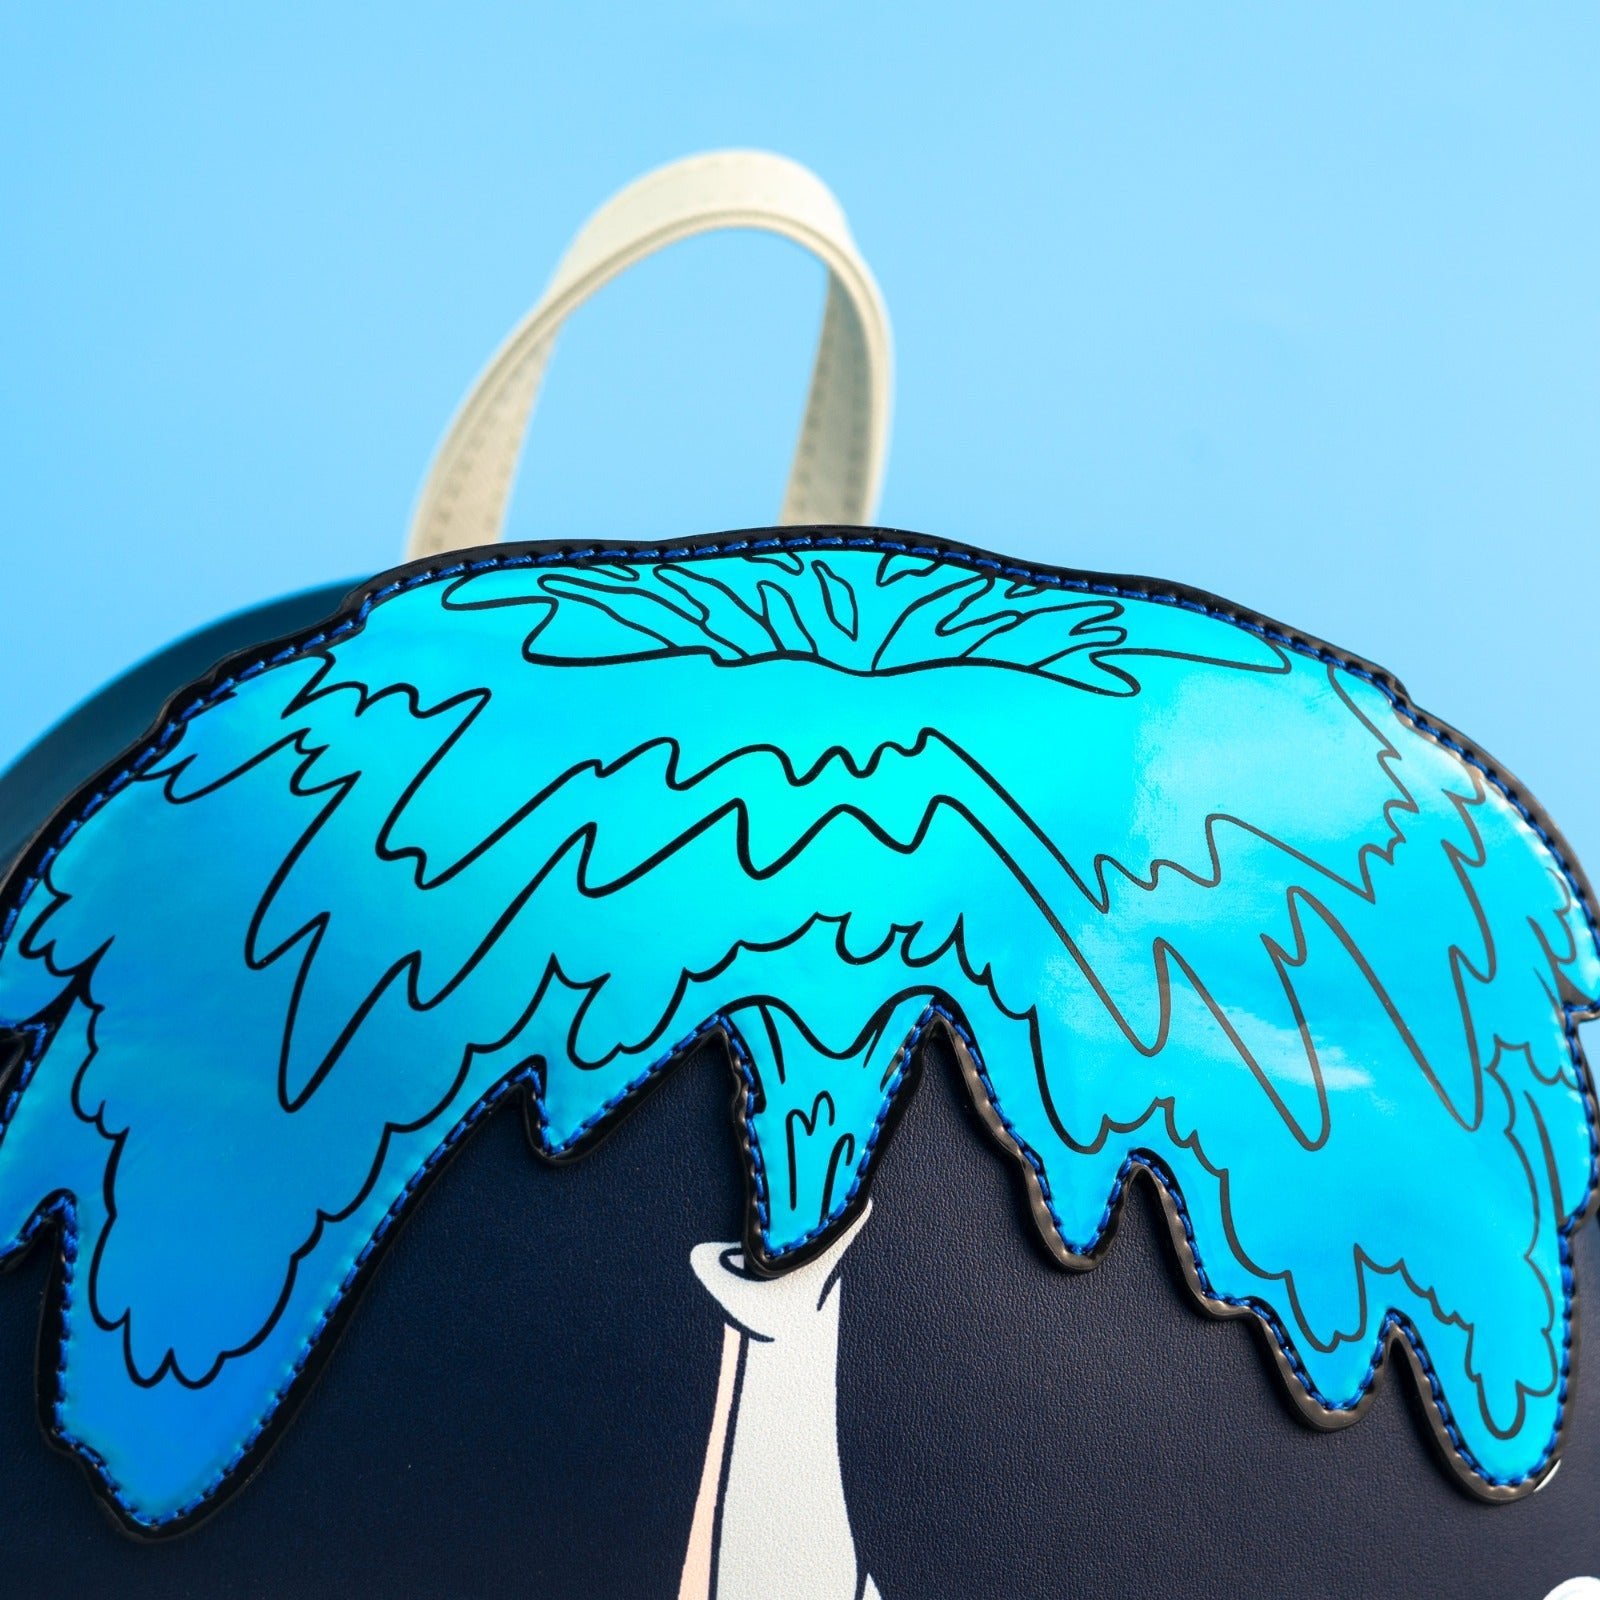 Loungefly x Disney Dumbo Bath Time Mini Backpack - GeekCore